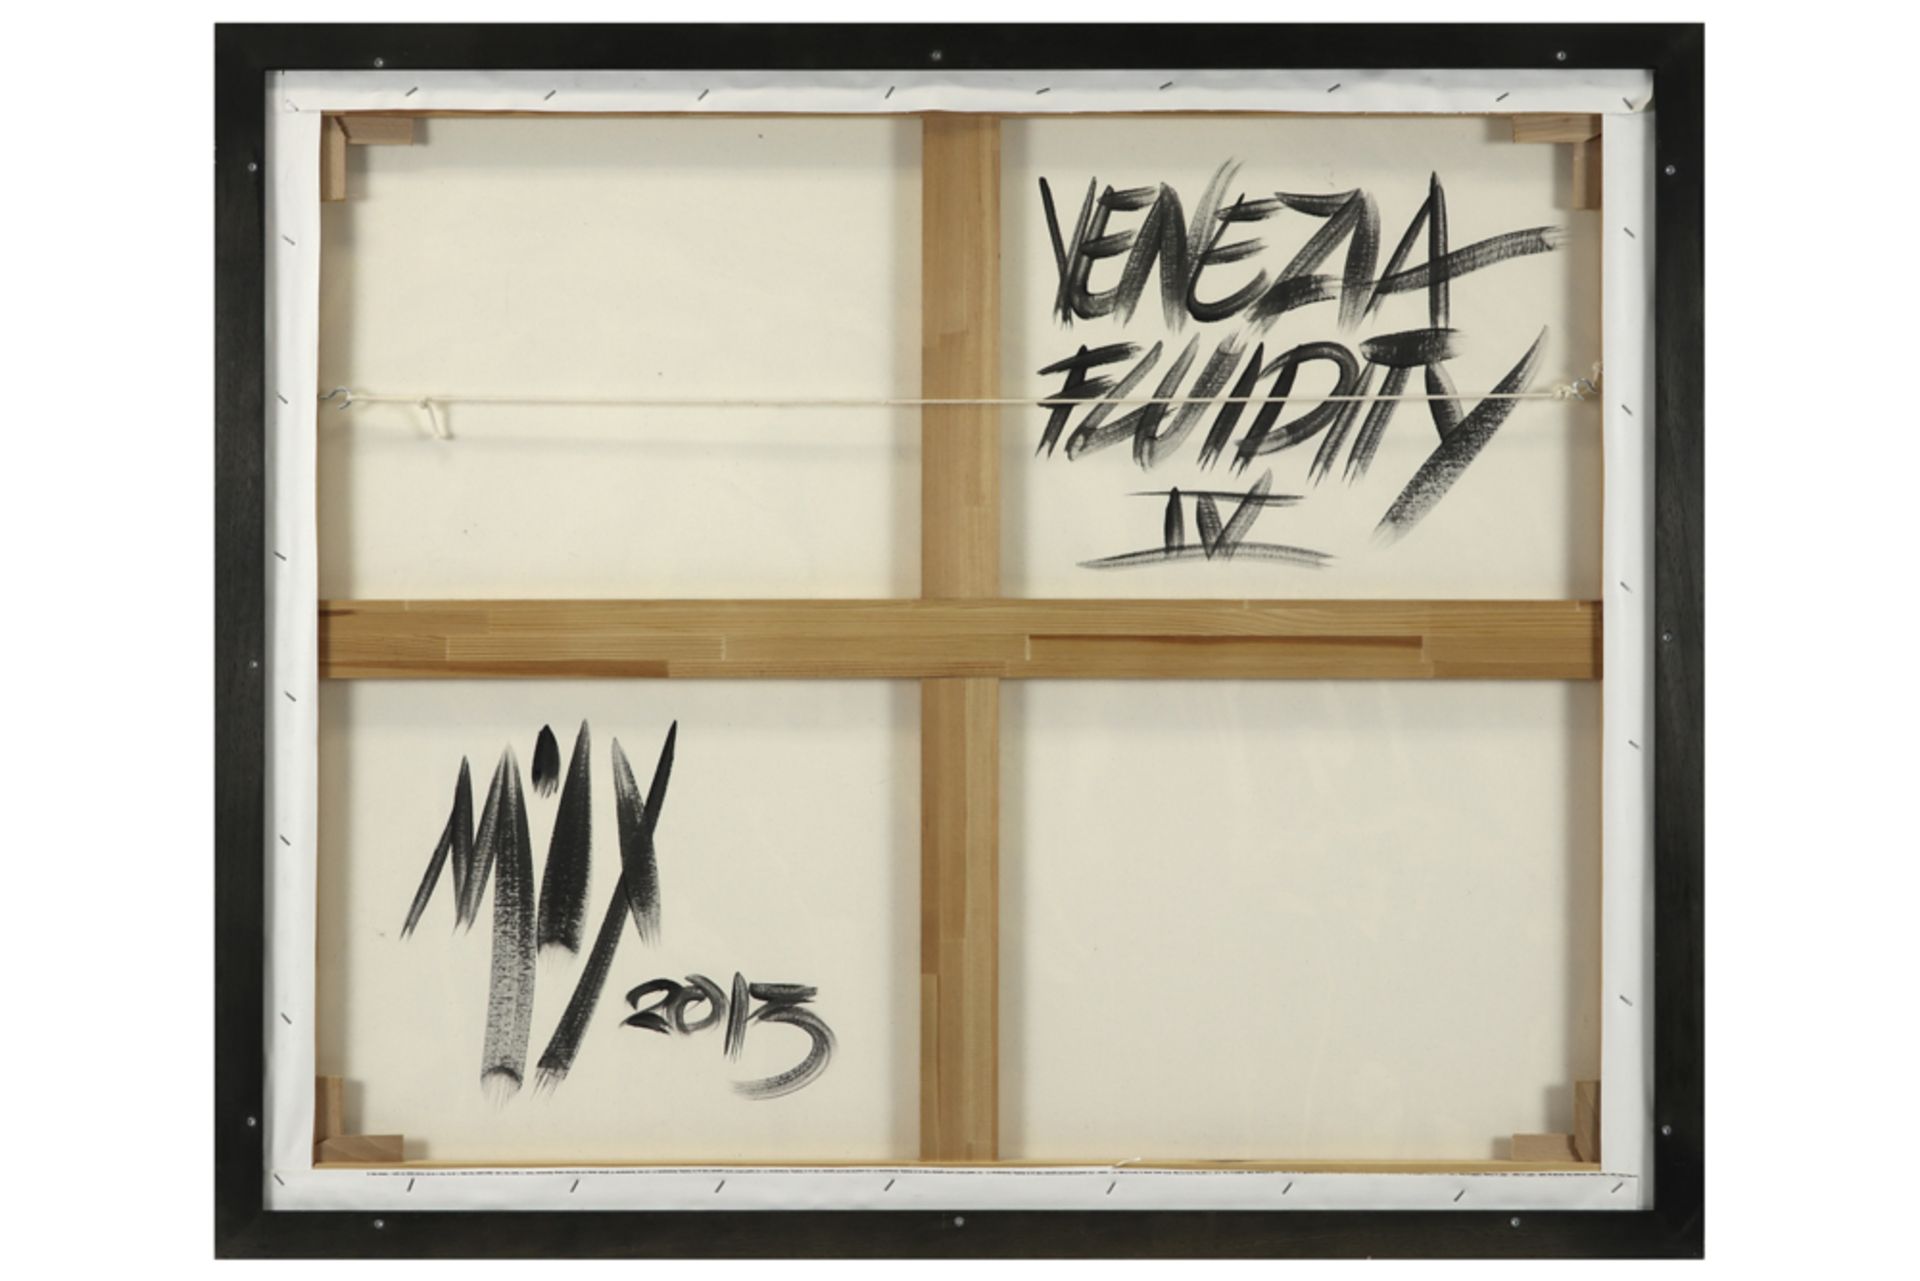 21st Cent. Belgian "Veneza Fluidity IV" screenprint on canvas - signed Marnix Verstraeten and - Image 3 of 3